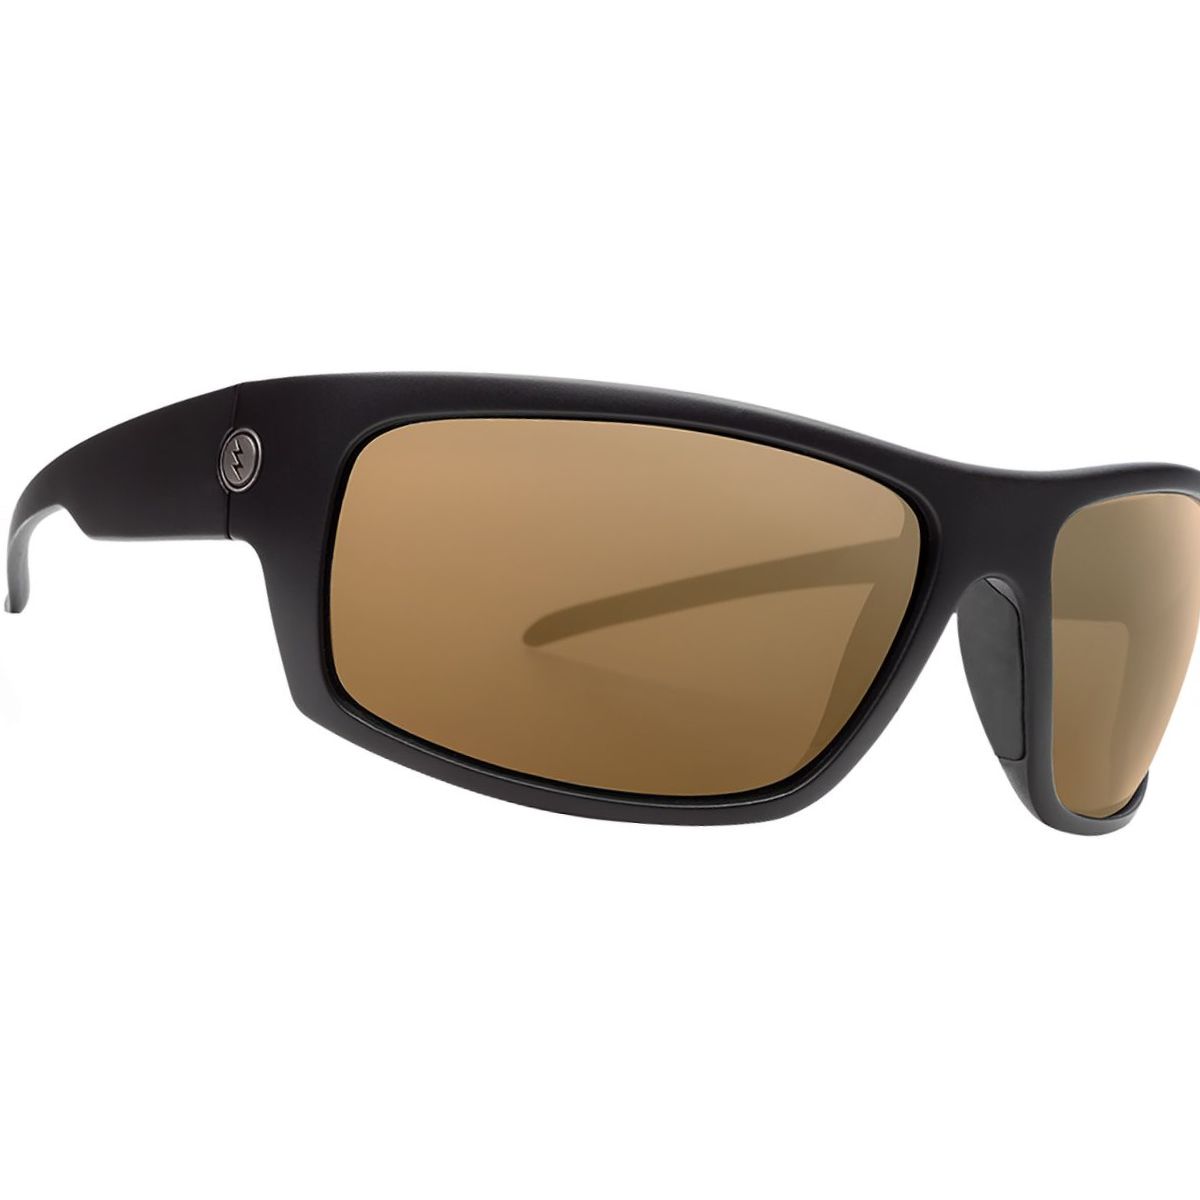 Electric Tech One Polarized Sunglasses - Men's